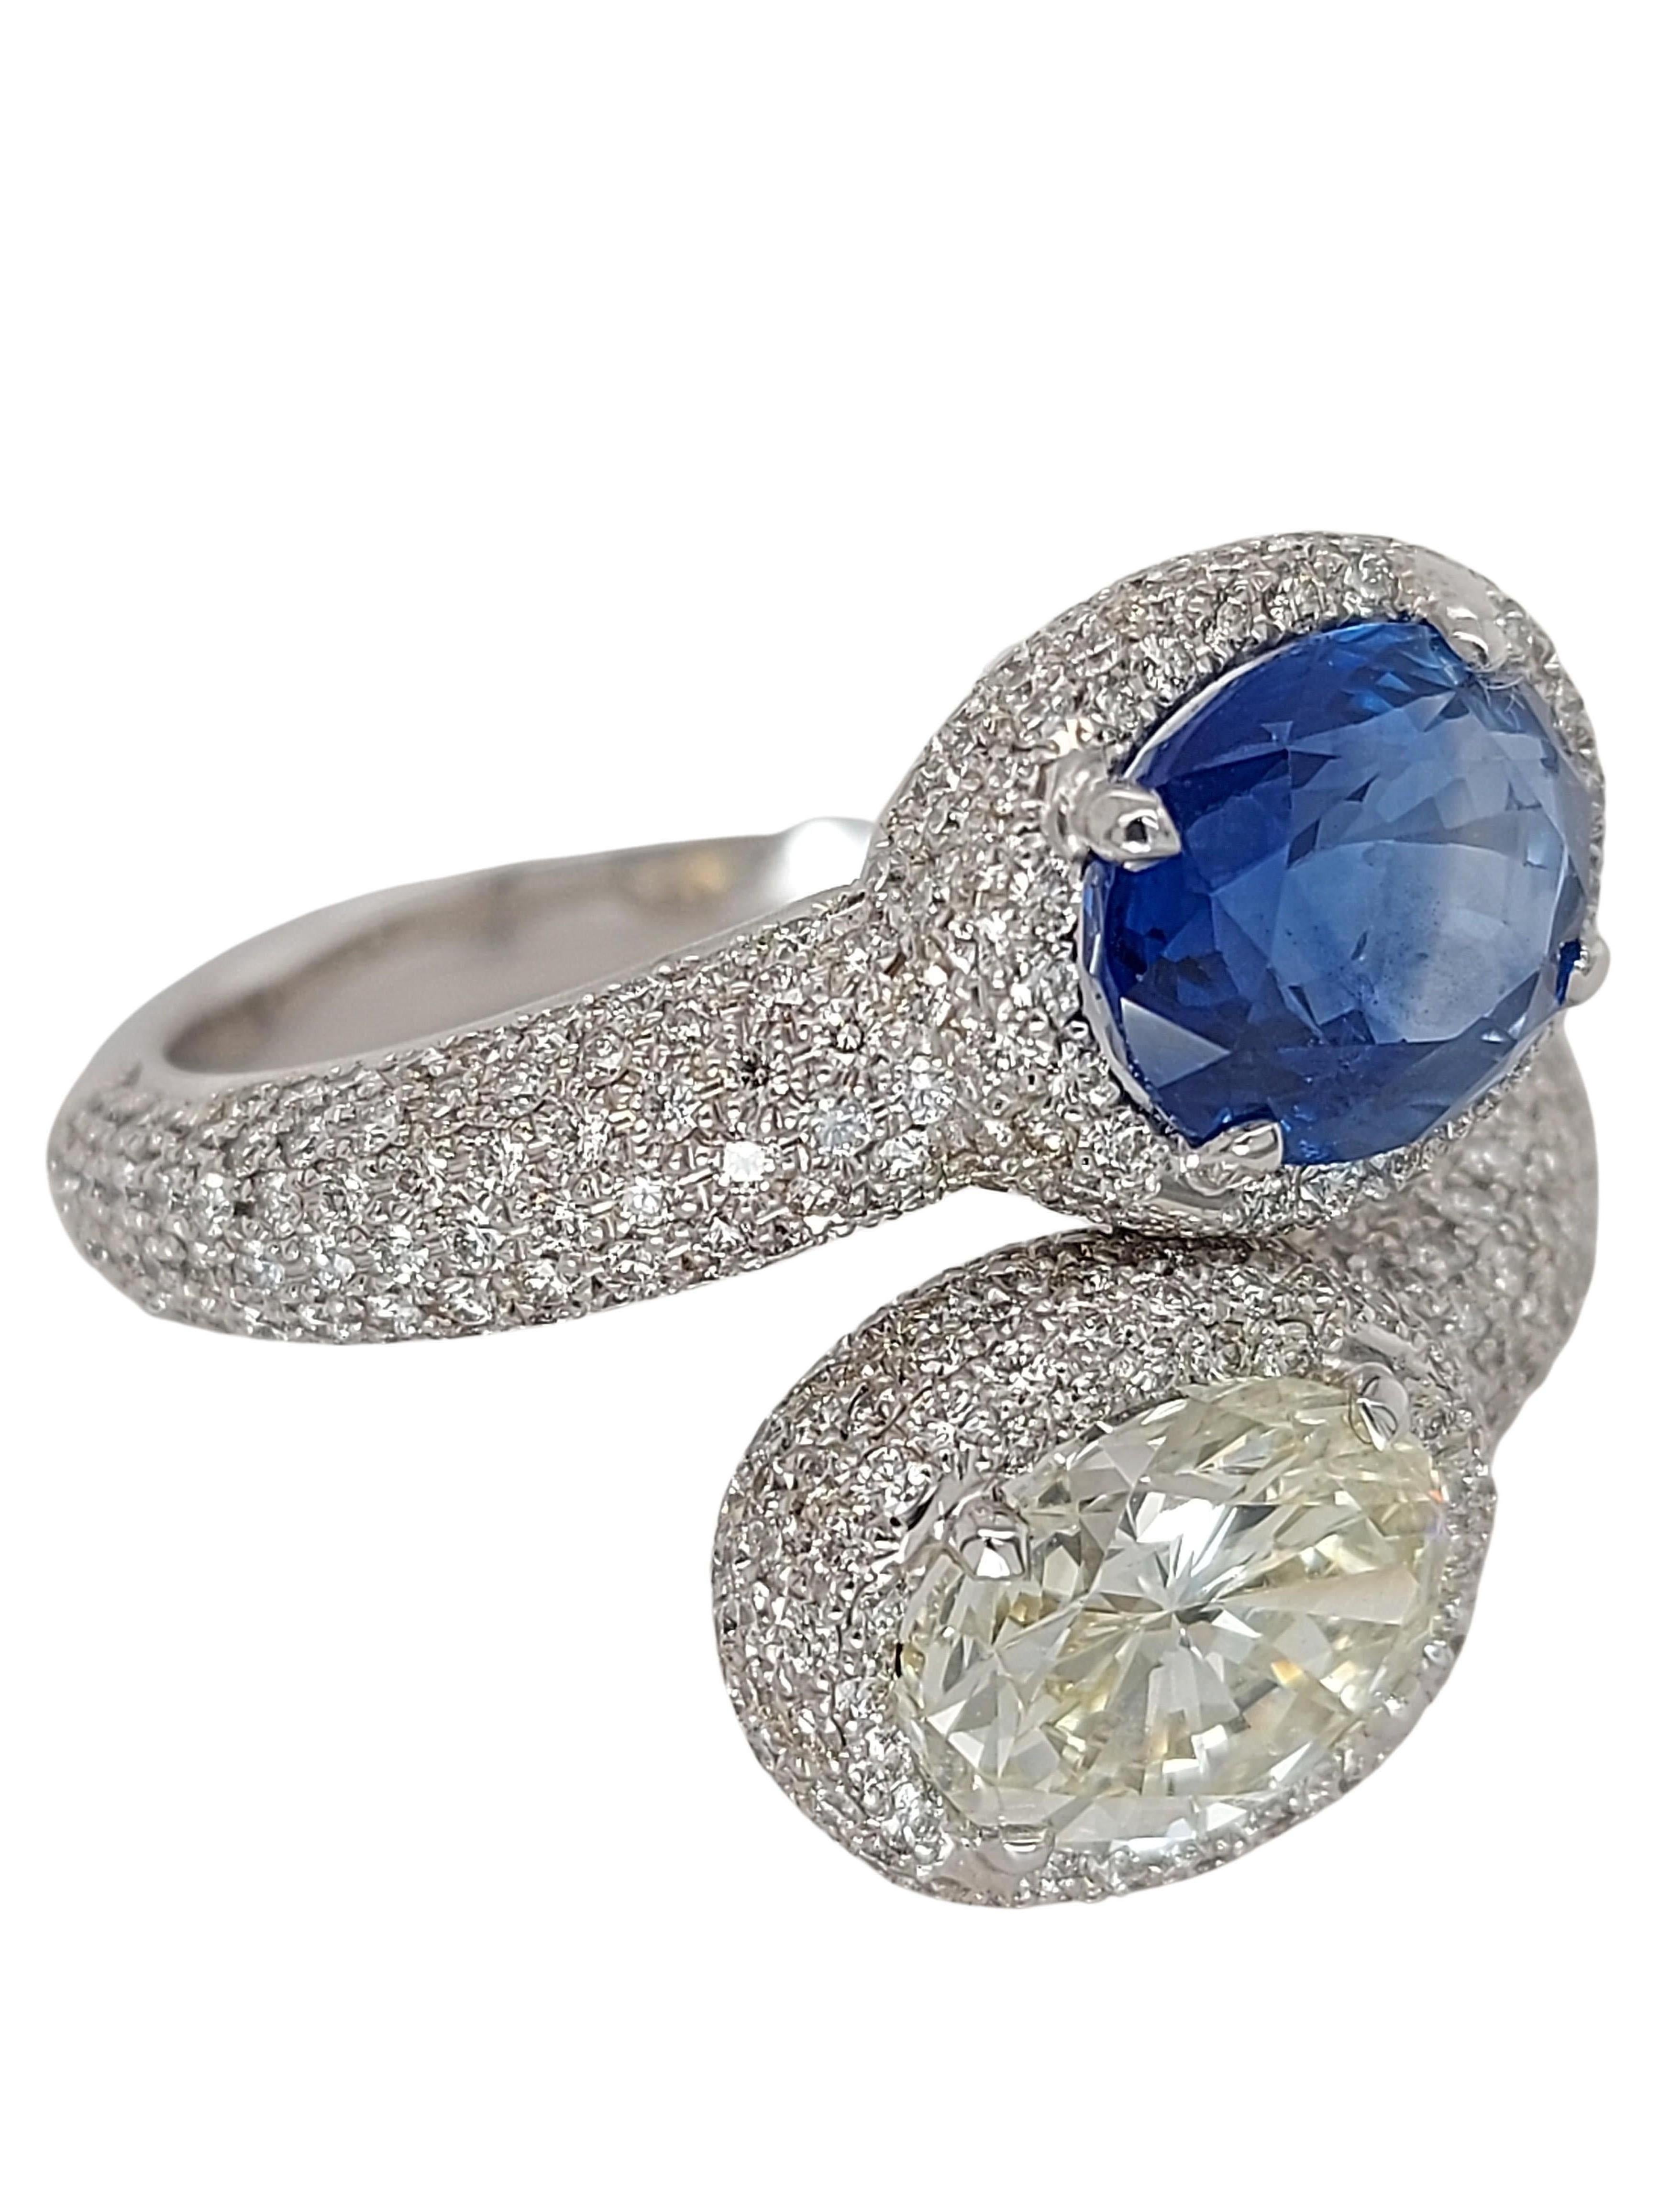 Stunning Toi et Moi 18kt white gold Ring with a 2.63 carat Sapphire, 1.67 carat diamond

Sapphire: Ceylon Sapphire, 2.63 carat, oval shape, Intense blue, Indications of heating, Measurements 8.65 x 7.03 x 4.62 mm

Diamond: Oval, 1.67 Carat, VS1,